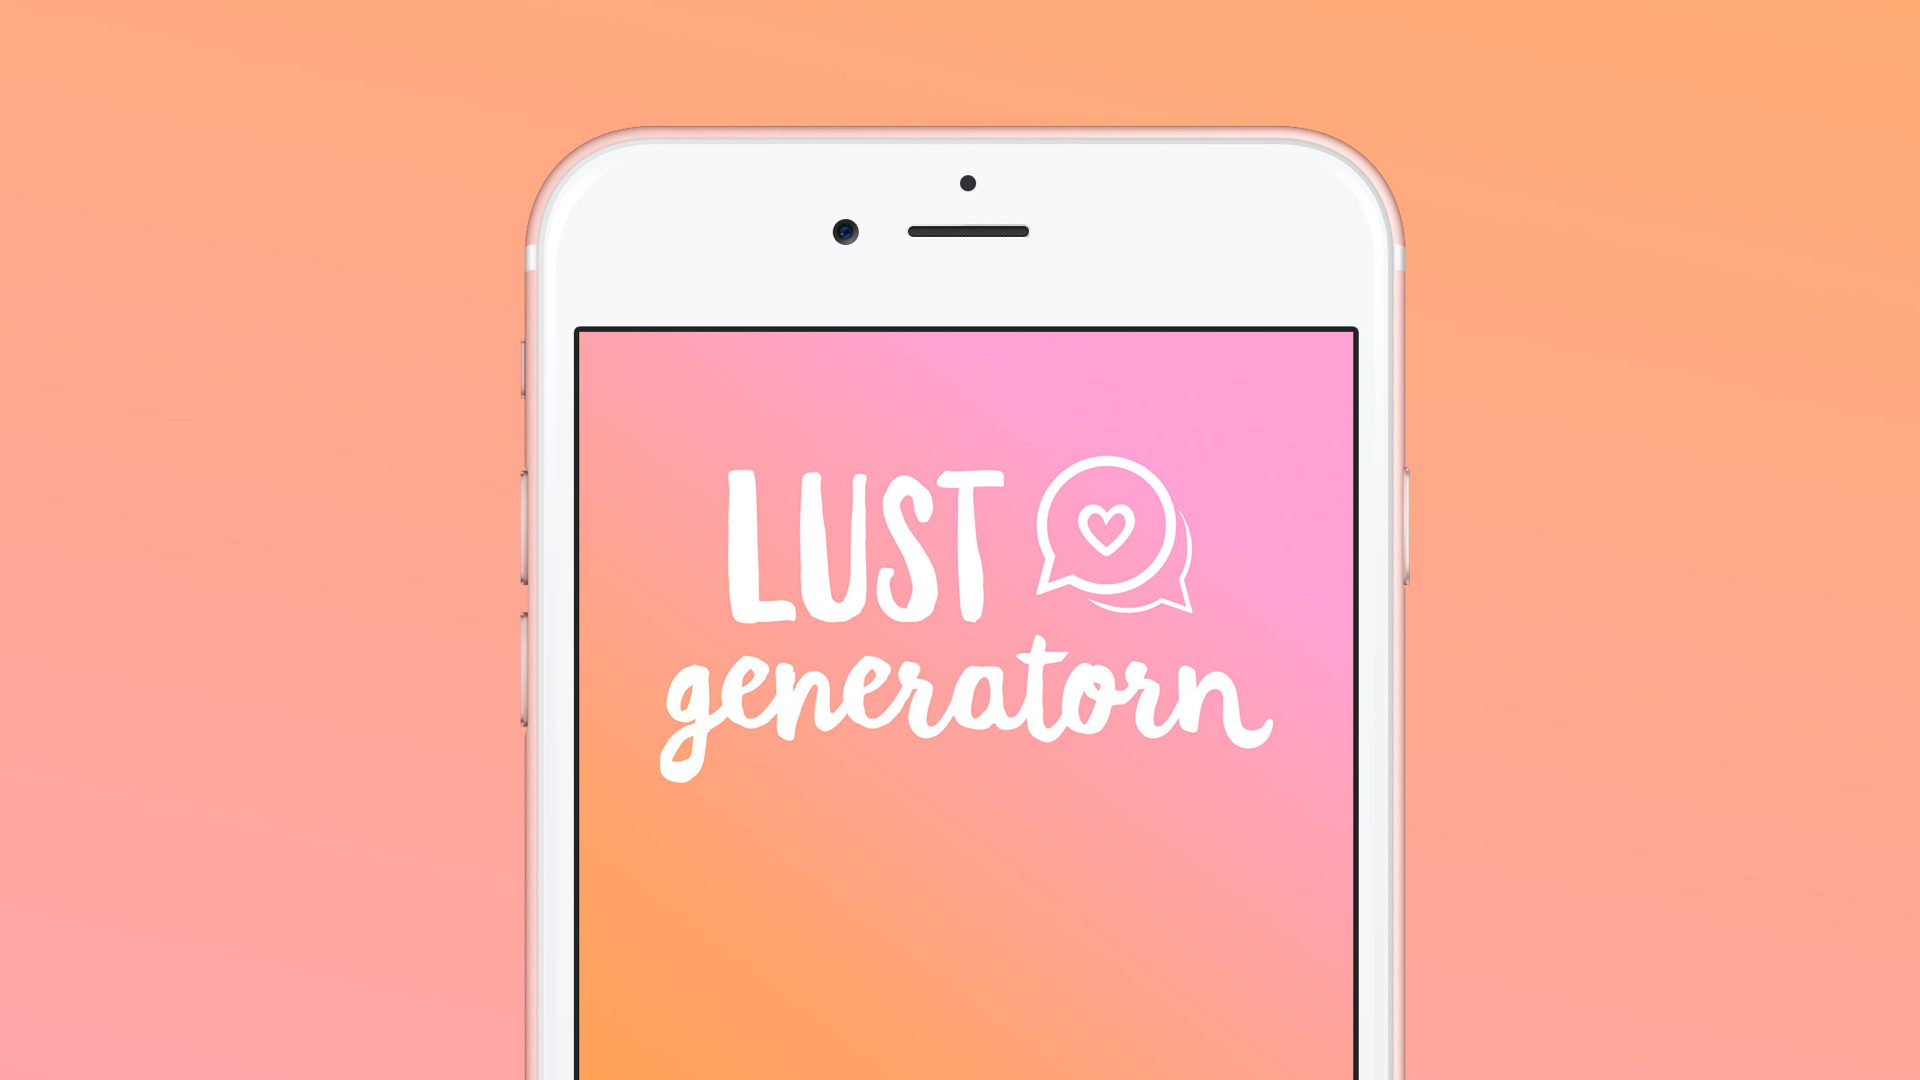 The Lust Generator